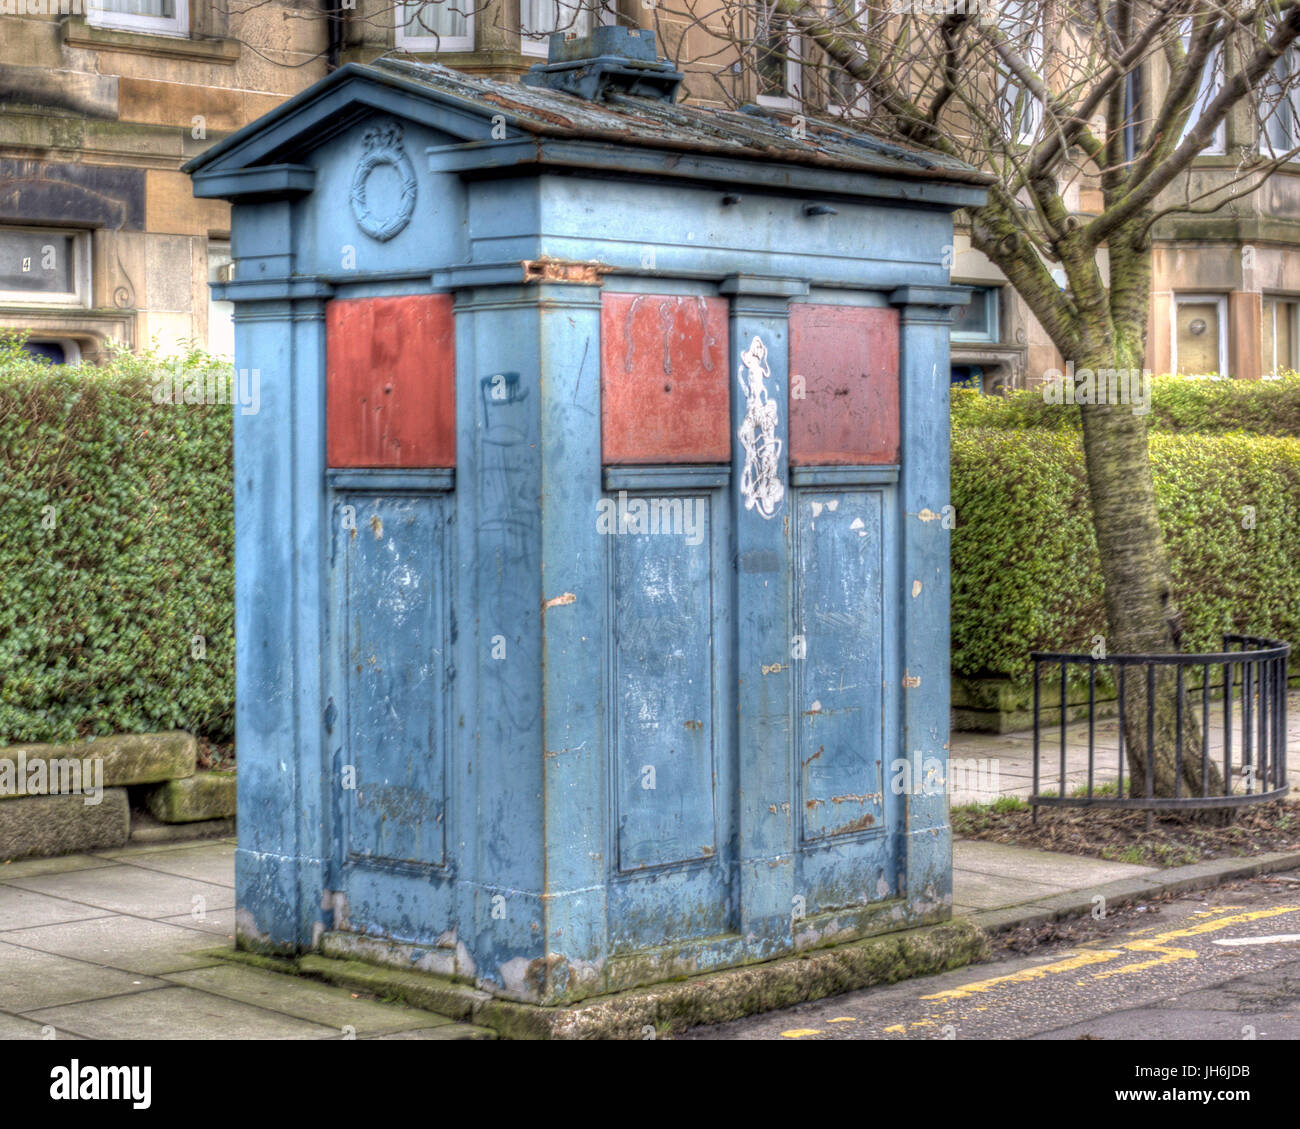 Edinburgh-Polizei box Telefon konvertierte Tardis nicht in desolatem Zustand Stockfoto